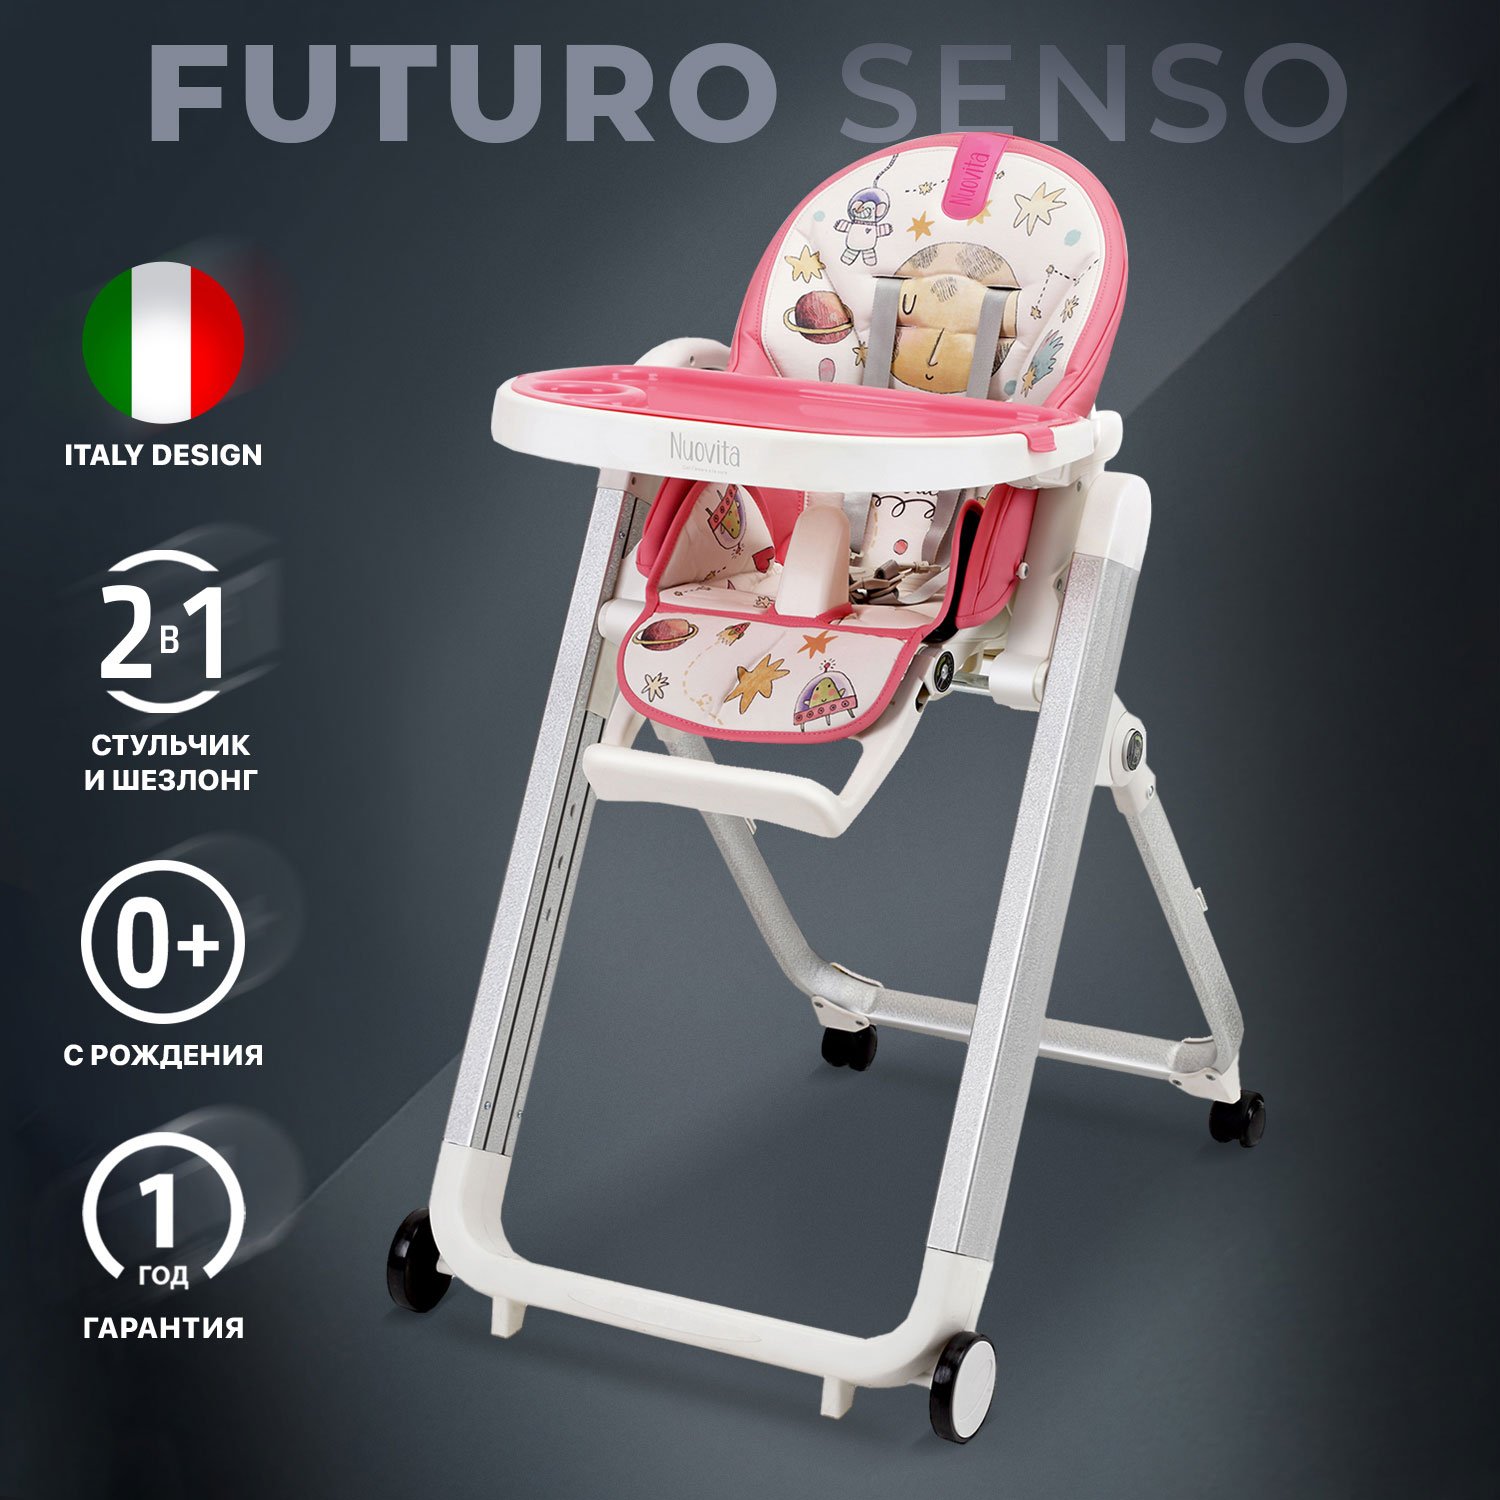 Стульчик для кормления Nuovita Futuro Senso Bianco (Cosmo rosa/Розовый космос) стульчик для кормления nuovita grande cosmo rosa розовый космос